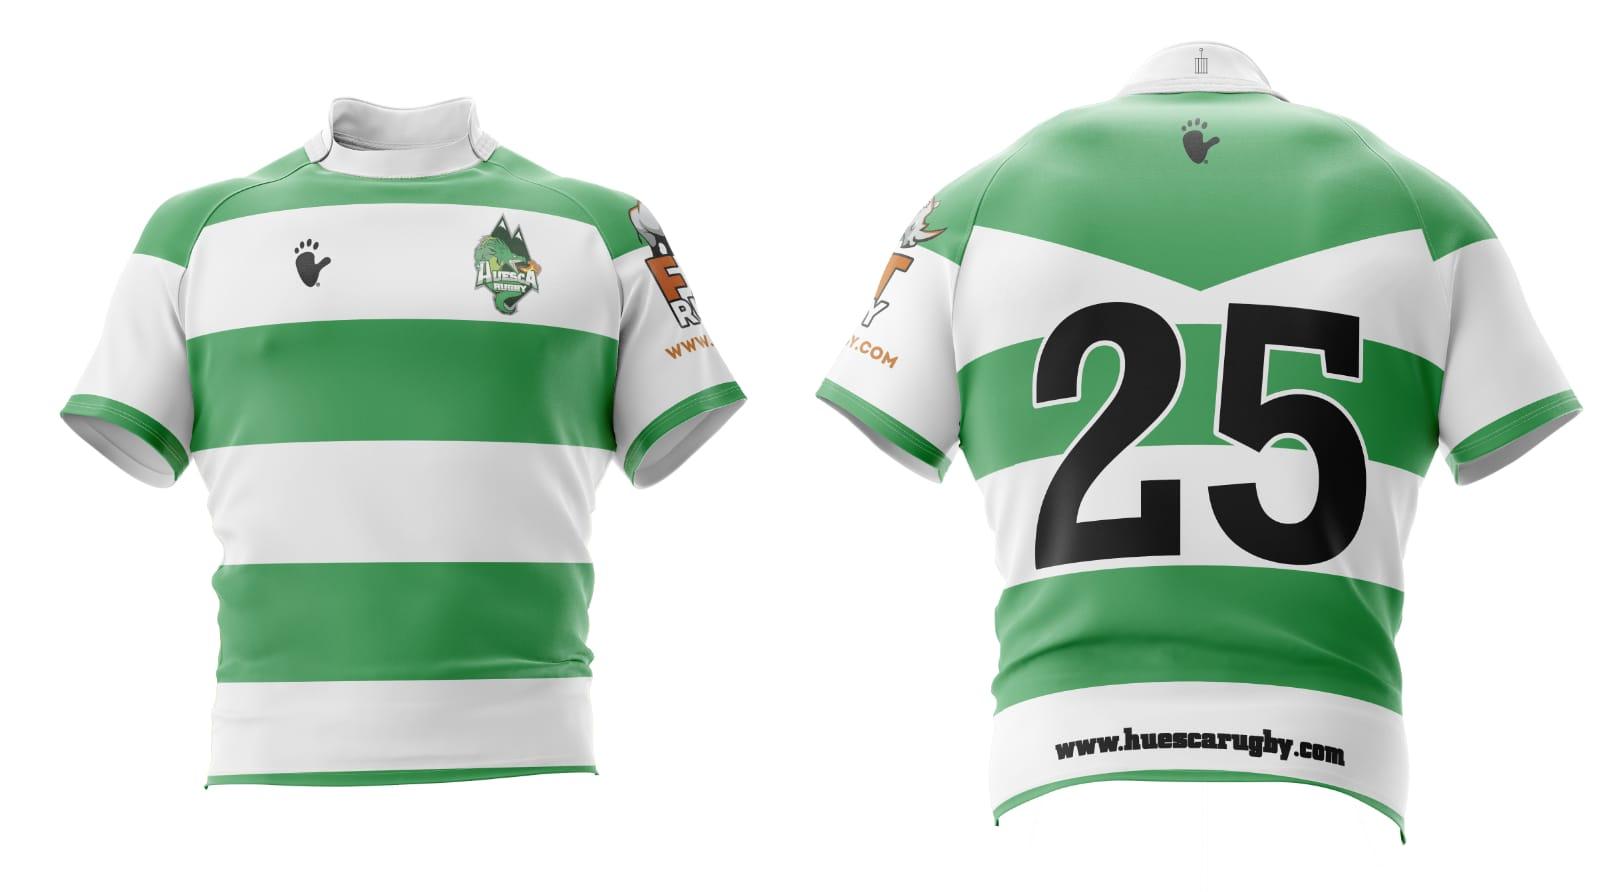 Camiseta Juego Huesca Rugby - Talla L